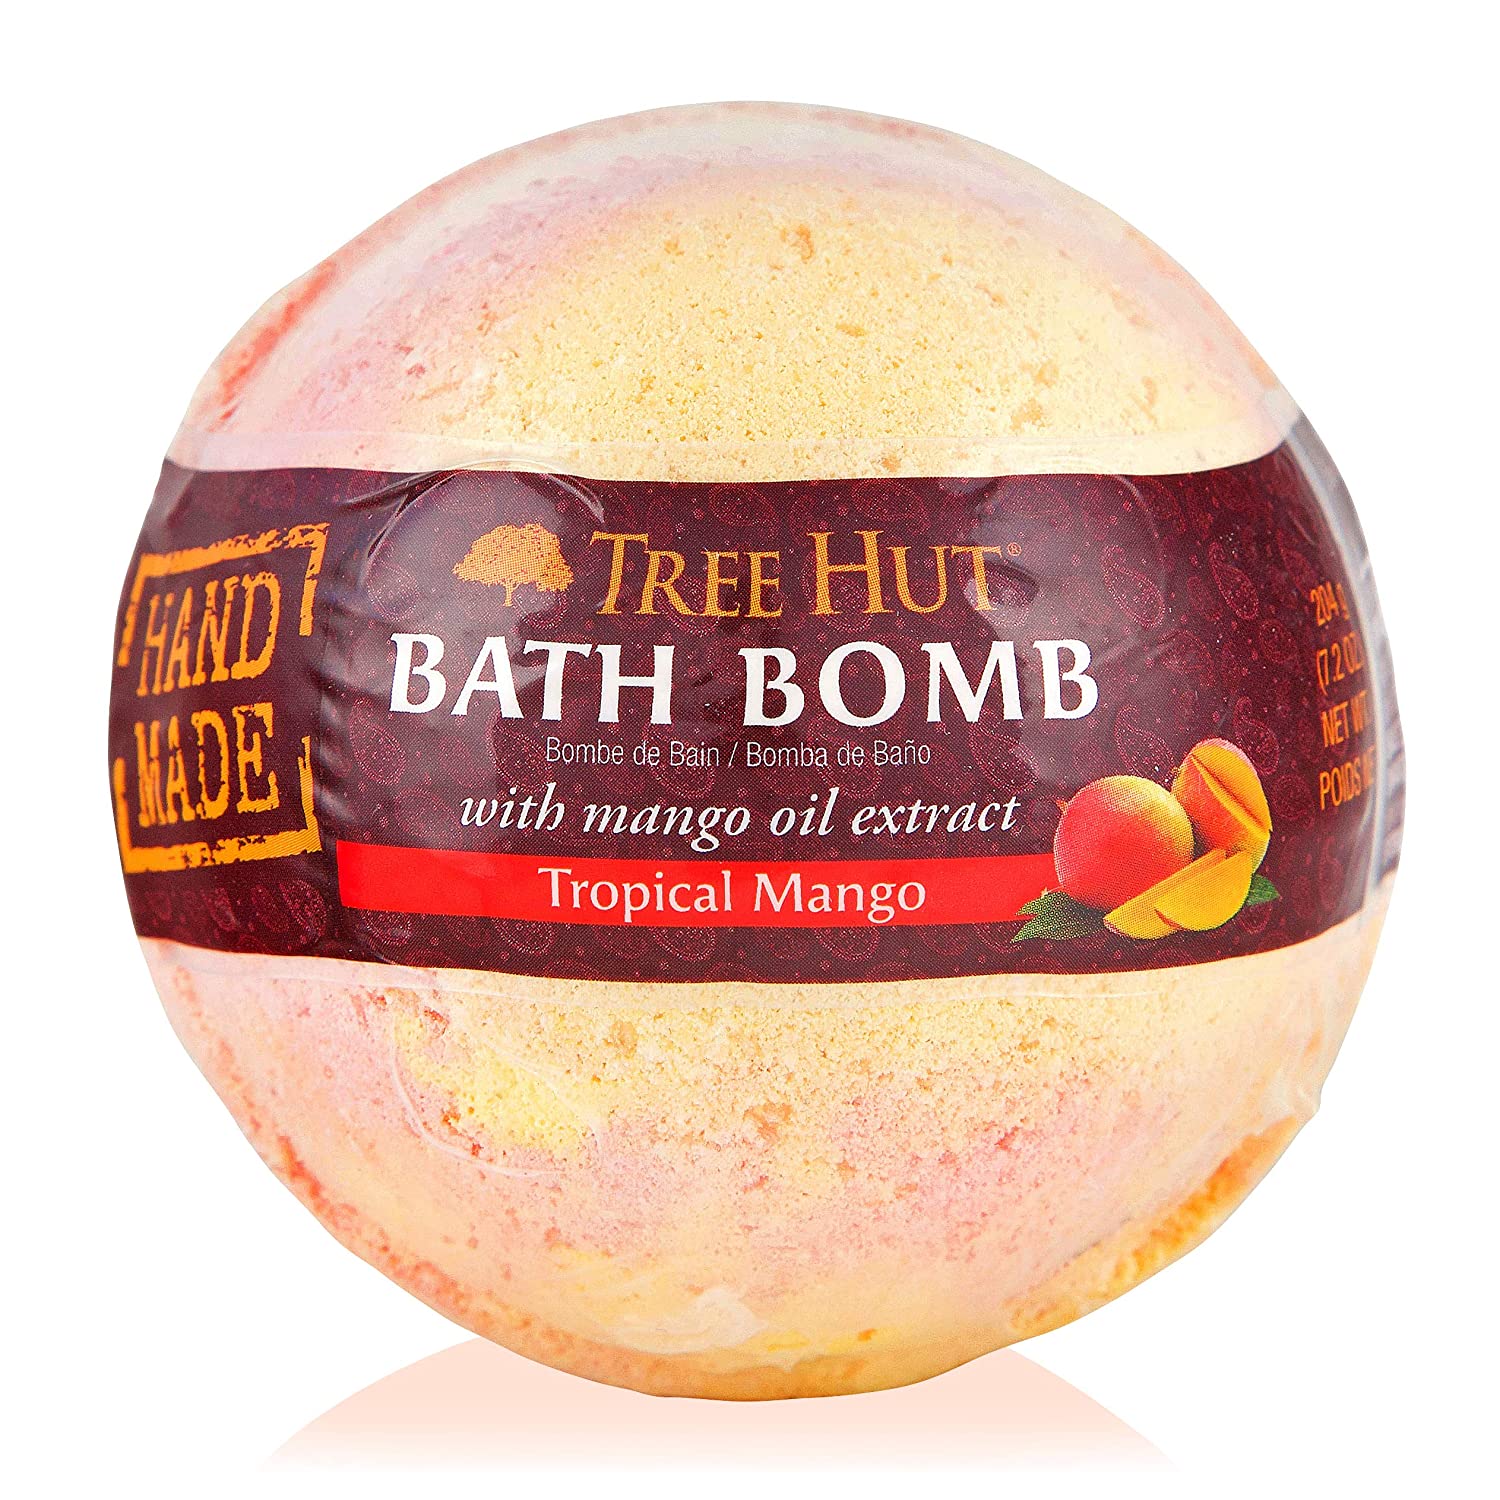 Tree Hut Bath Bomb Tropical Mango